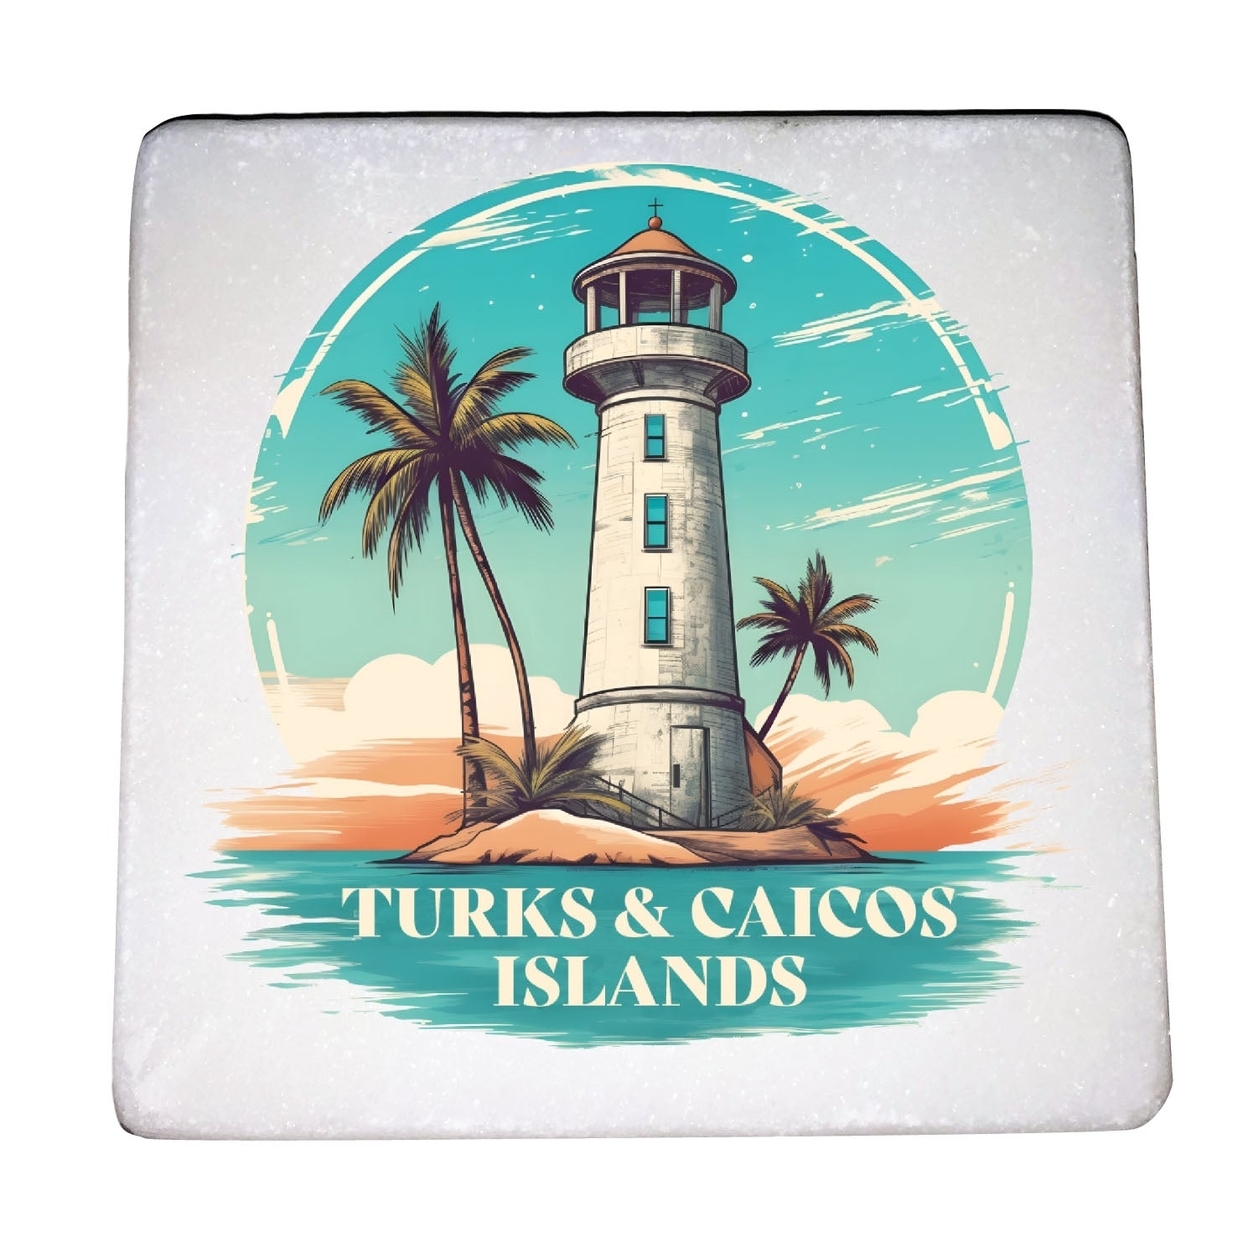 Turks And Caicos Design A Souvenir 4x4-Inch Coaster Marble 4 Pack